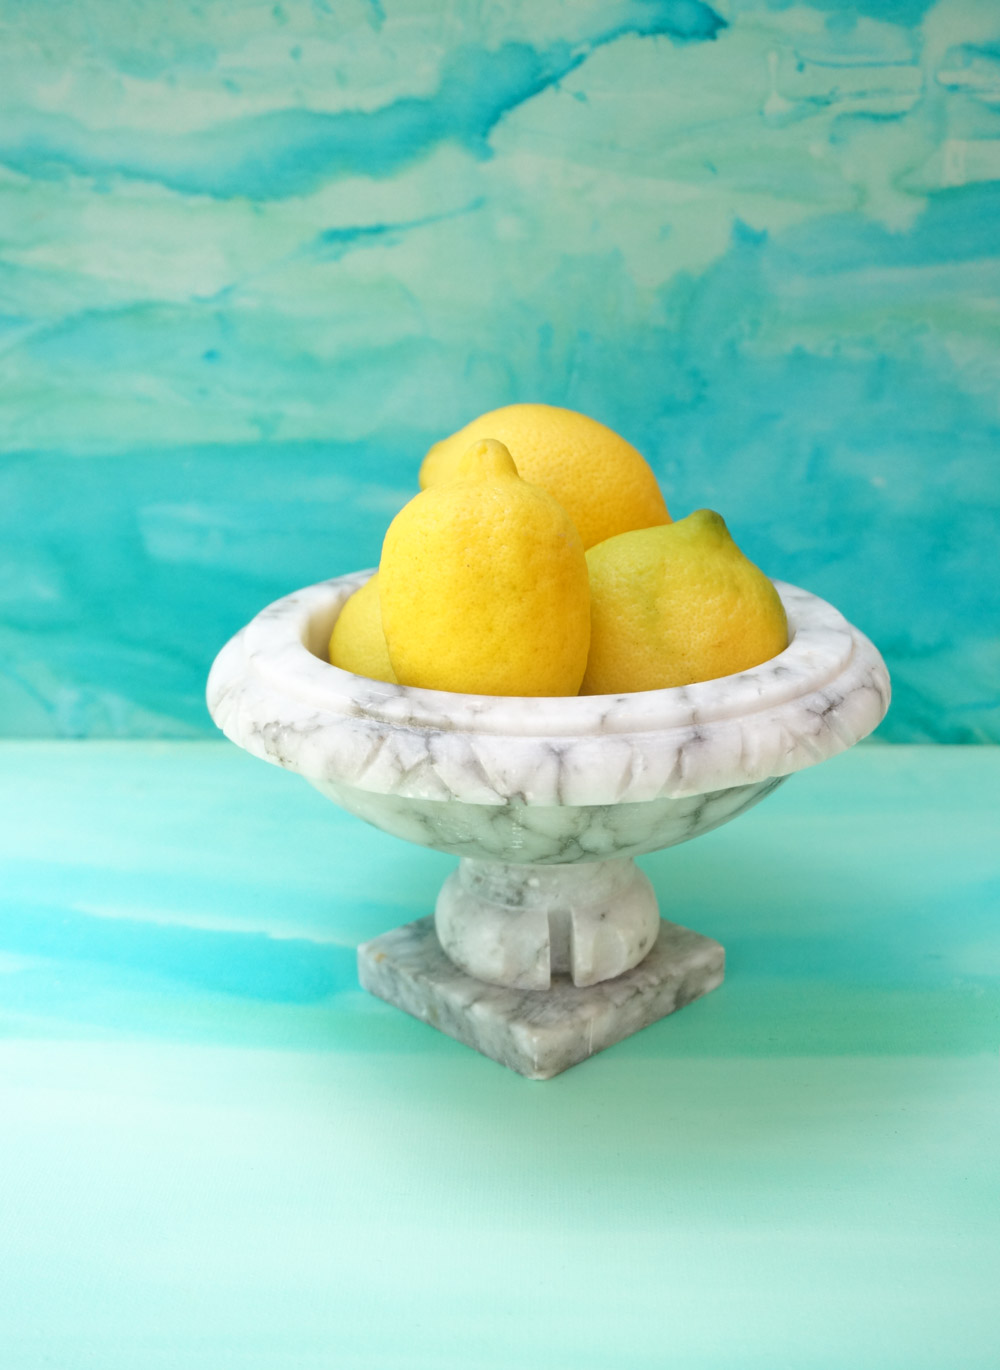 Nothing says summer like an urn of lemons